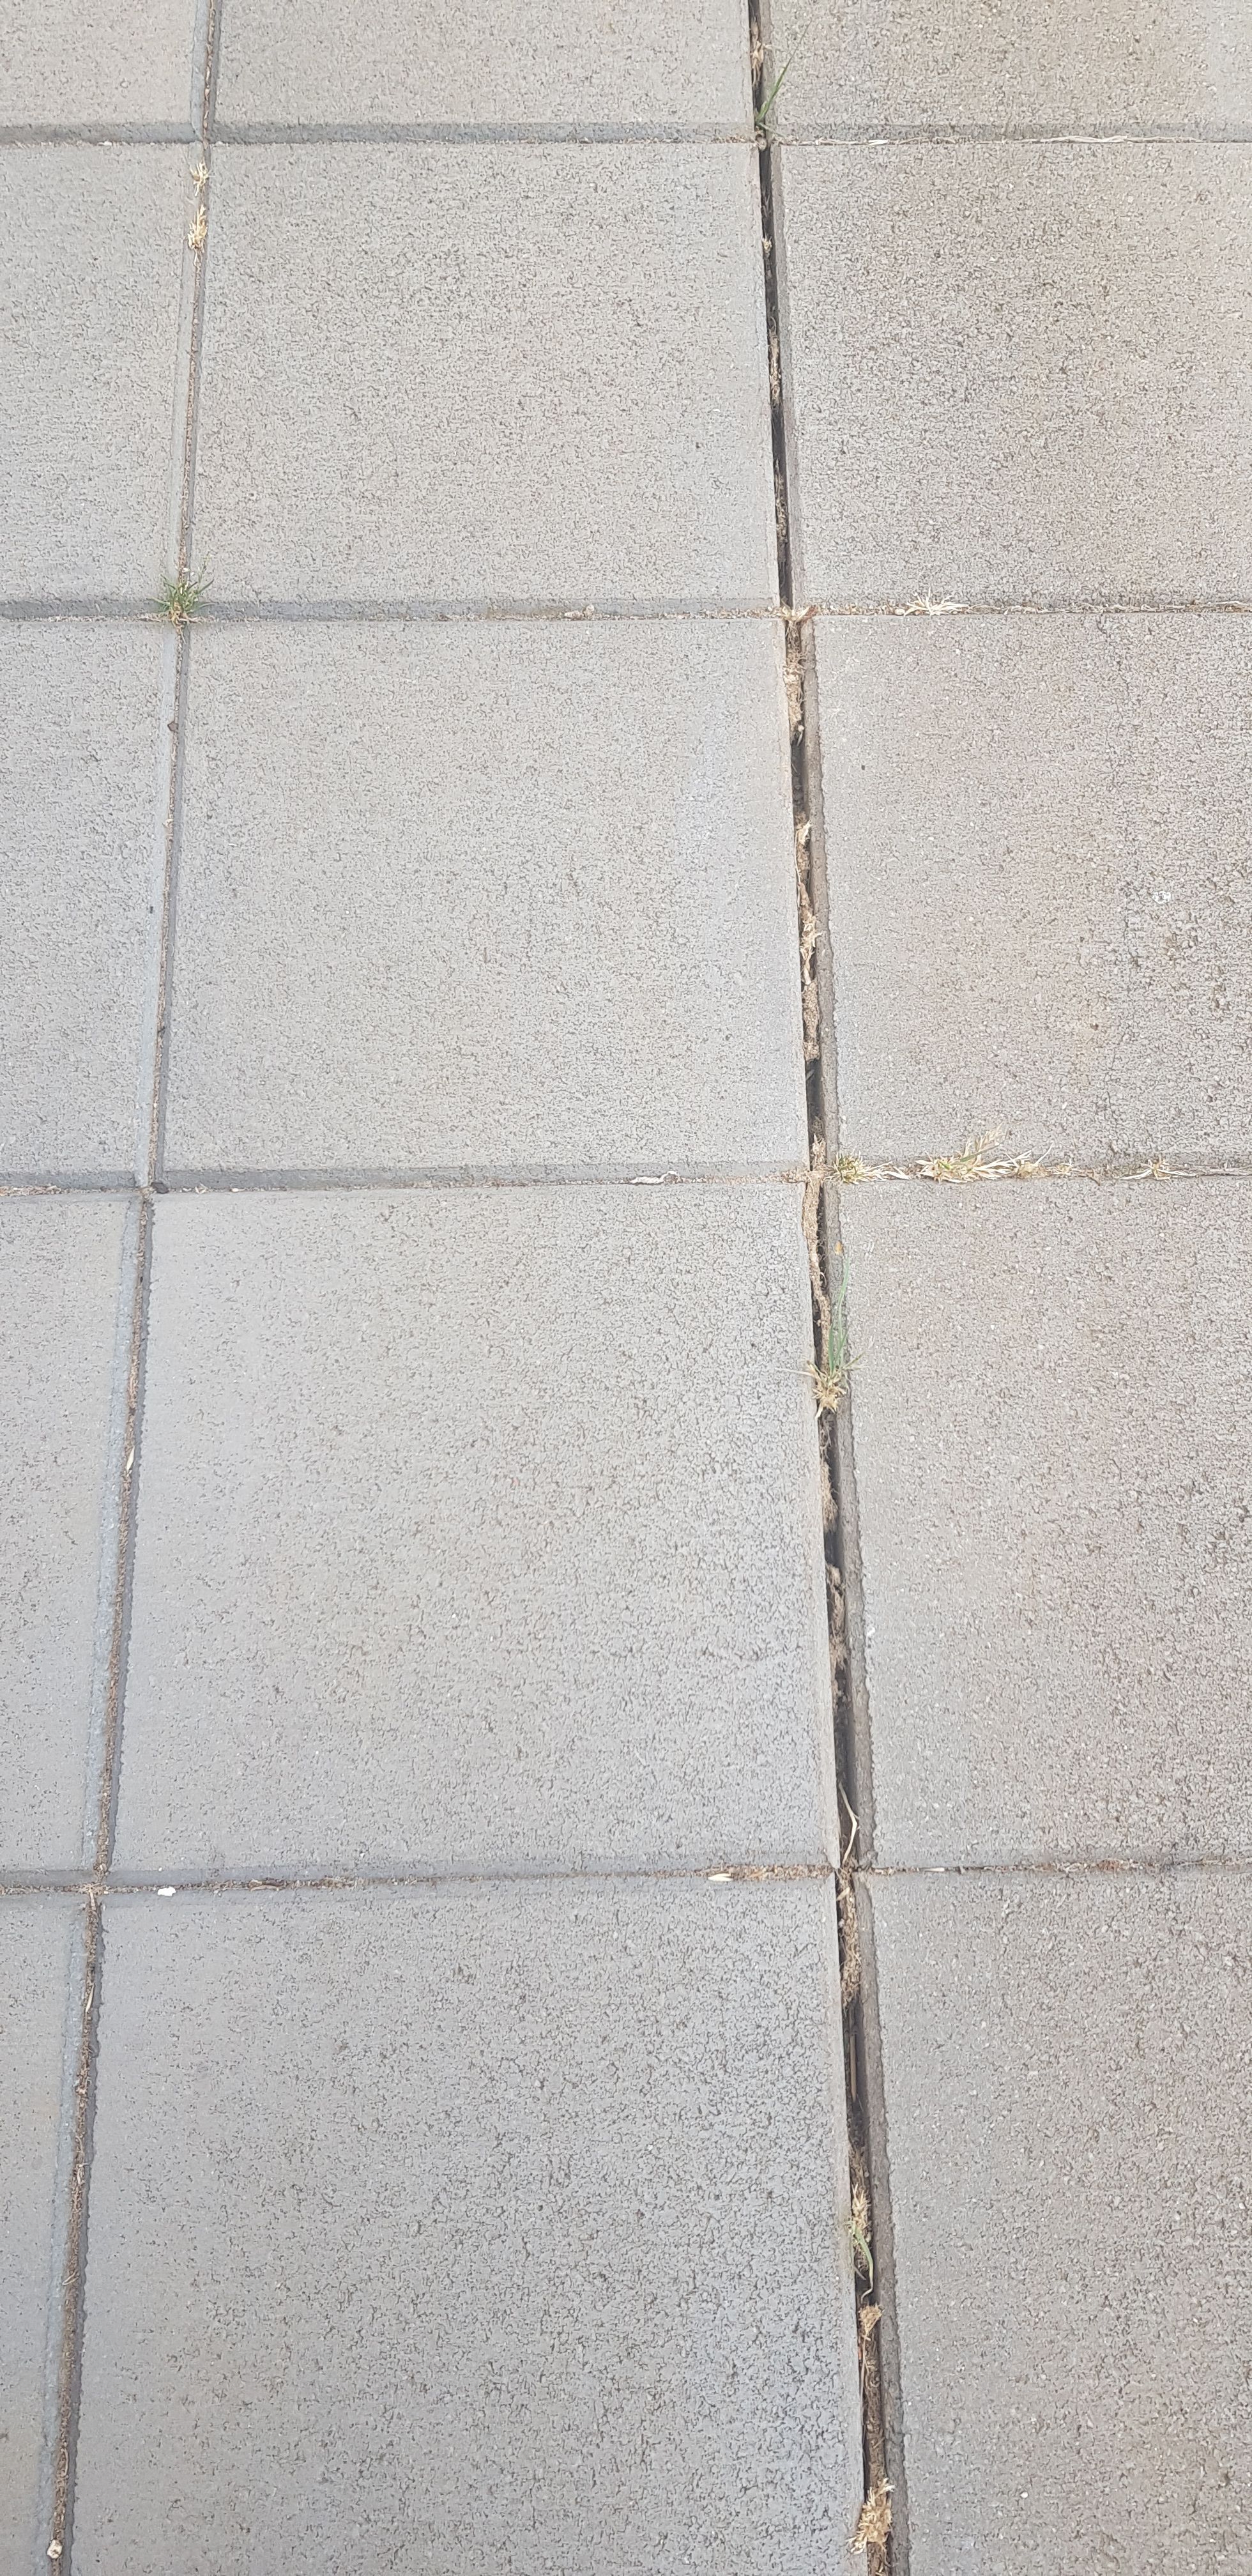 Patio concrete paving repair | Bunnings Workshop community